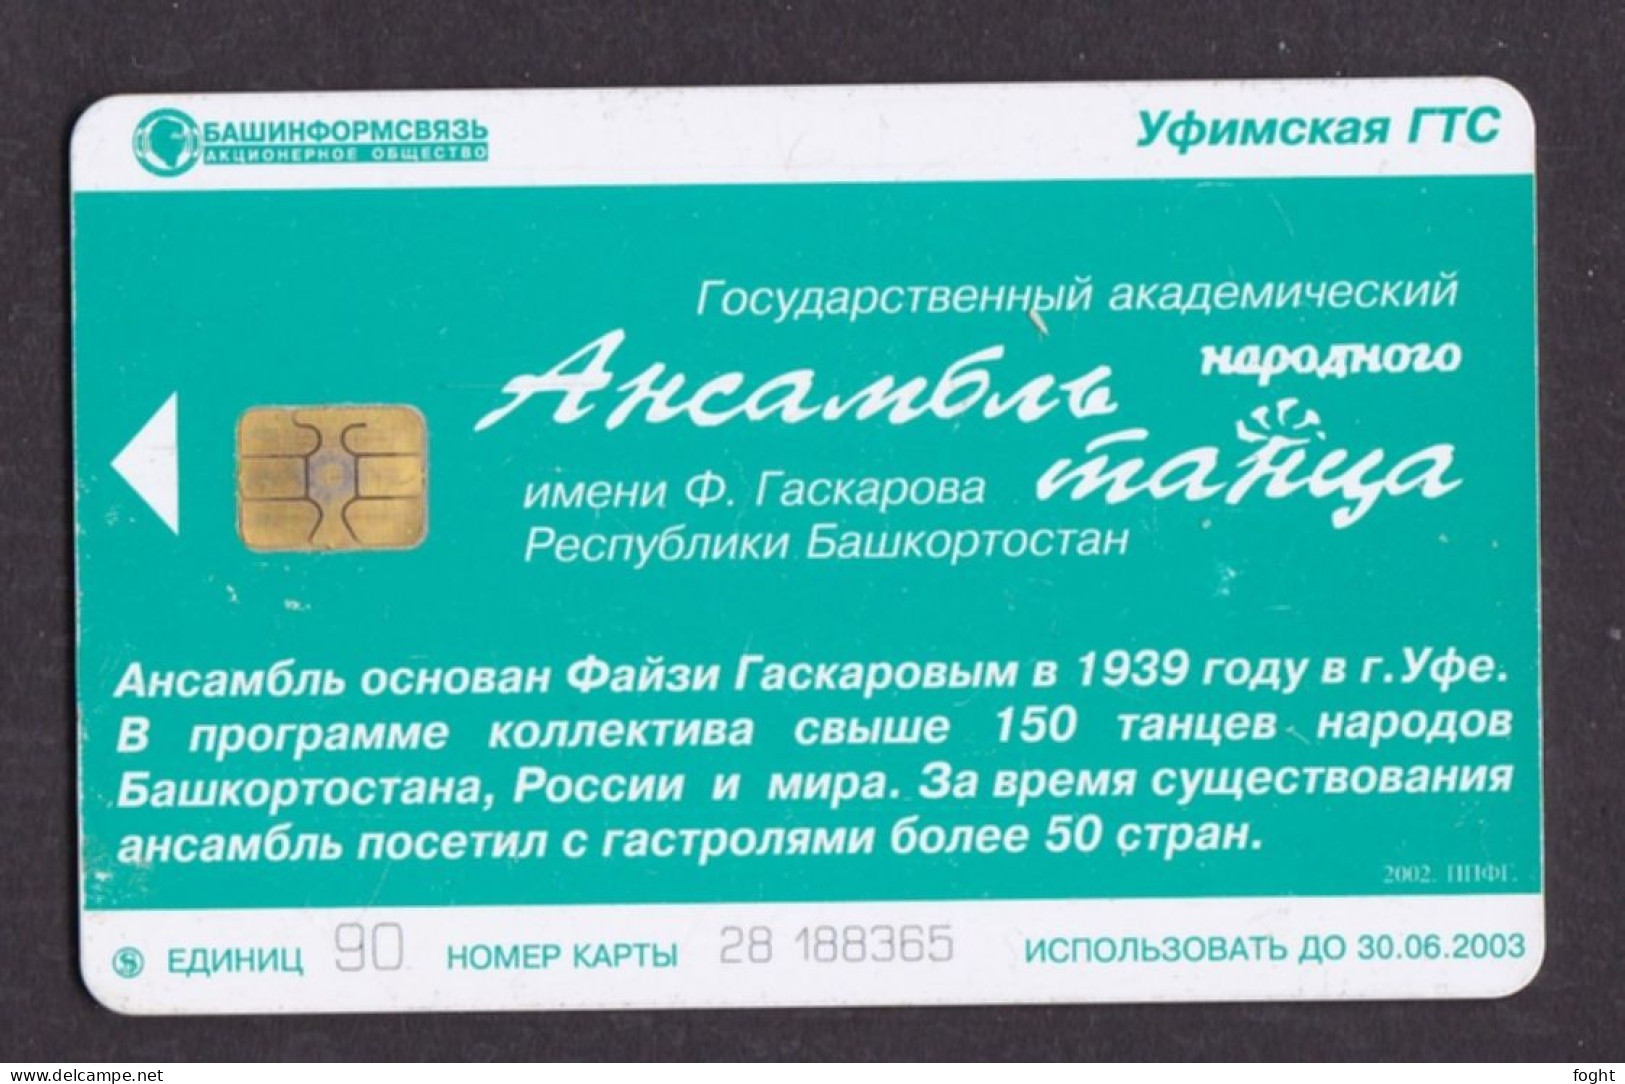 2002 Russia Bashinformsvyaz-Ufa,Tatar Dance "Bridegroom",90 Units Card,Col:RU-BIS-V-006 - Russie